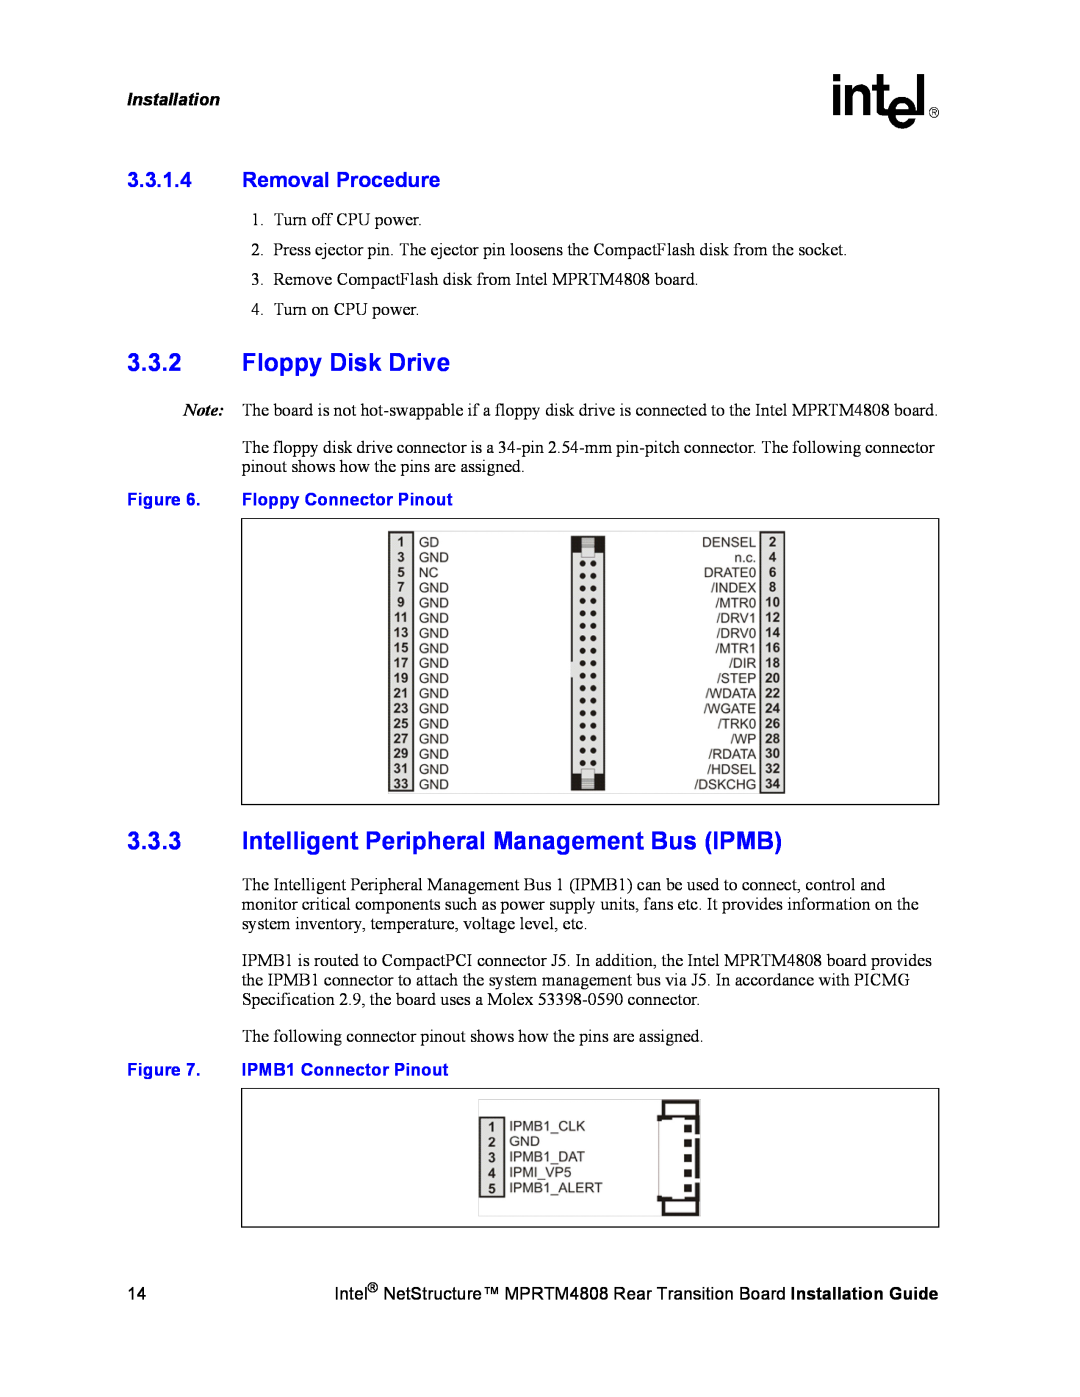 Intel MPRTM4808 manual 3.3.2Floppy Disk Drive, 3.3.3Intelligent Peripheral Management Bus IPMB, 3.3.1.4Removal Procedure 